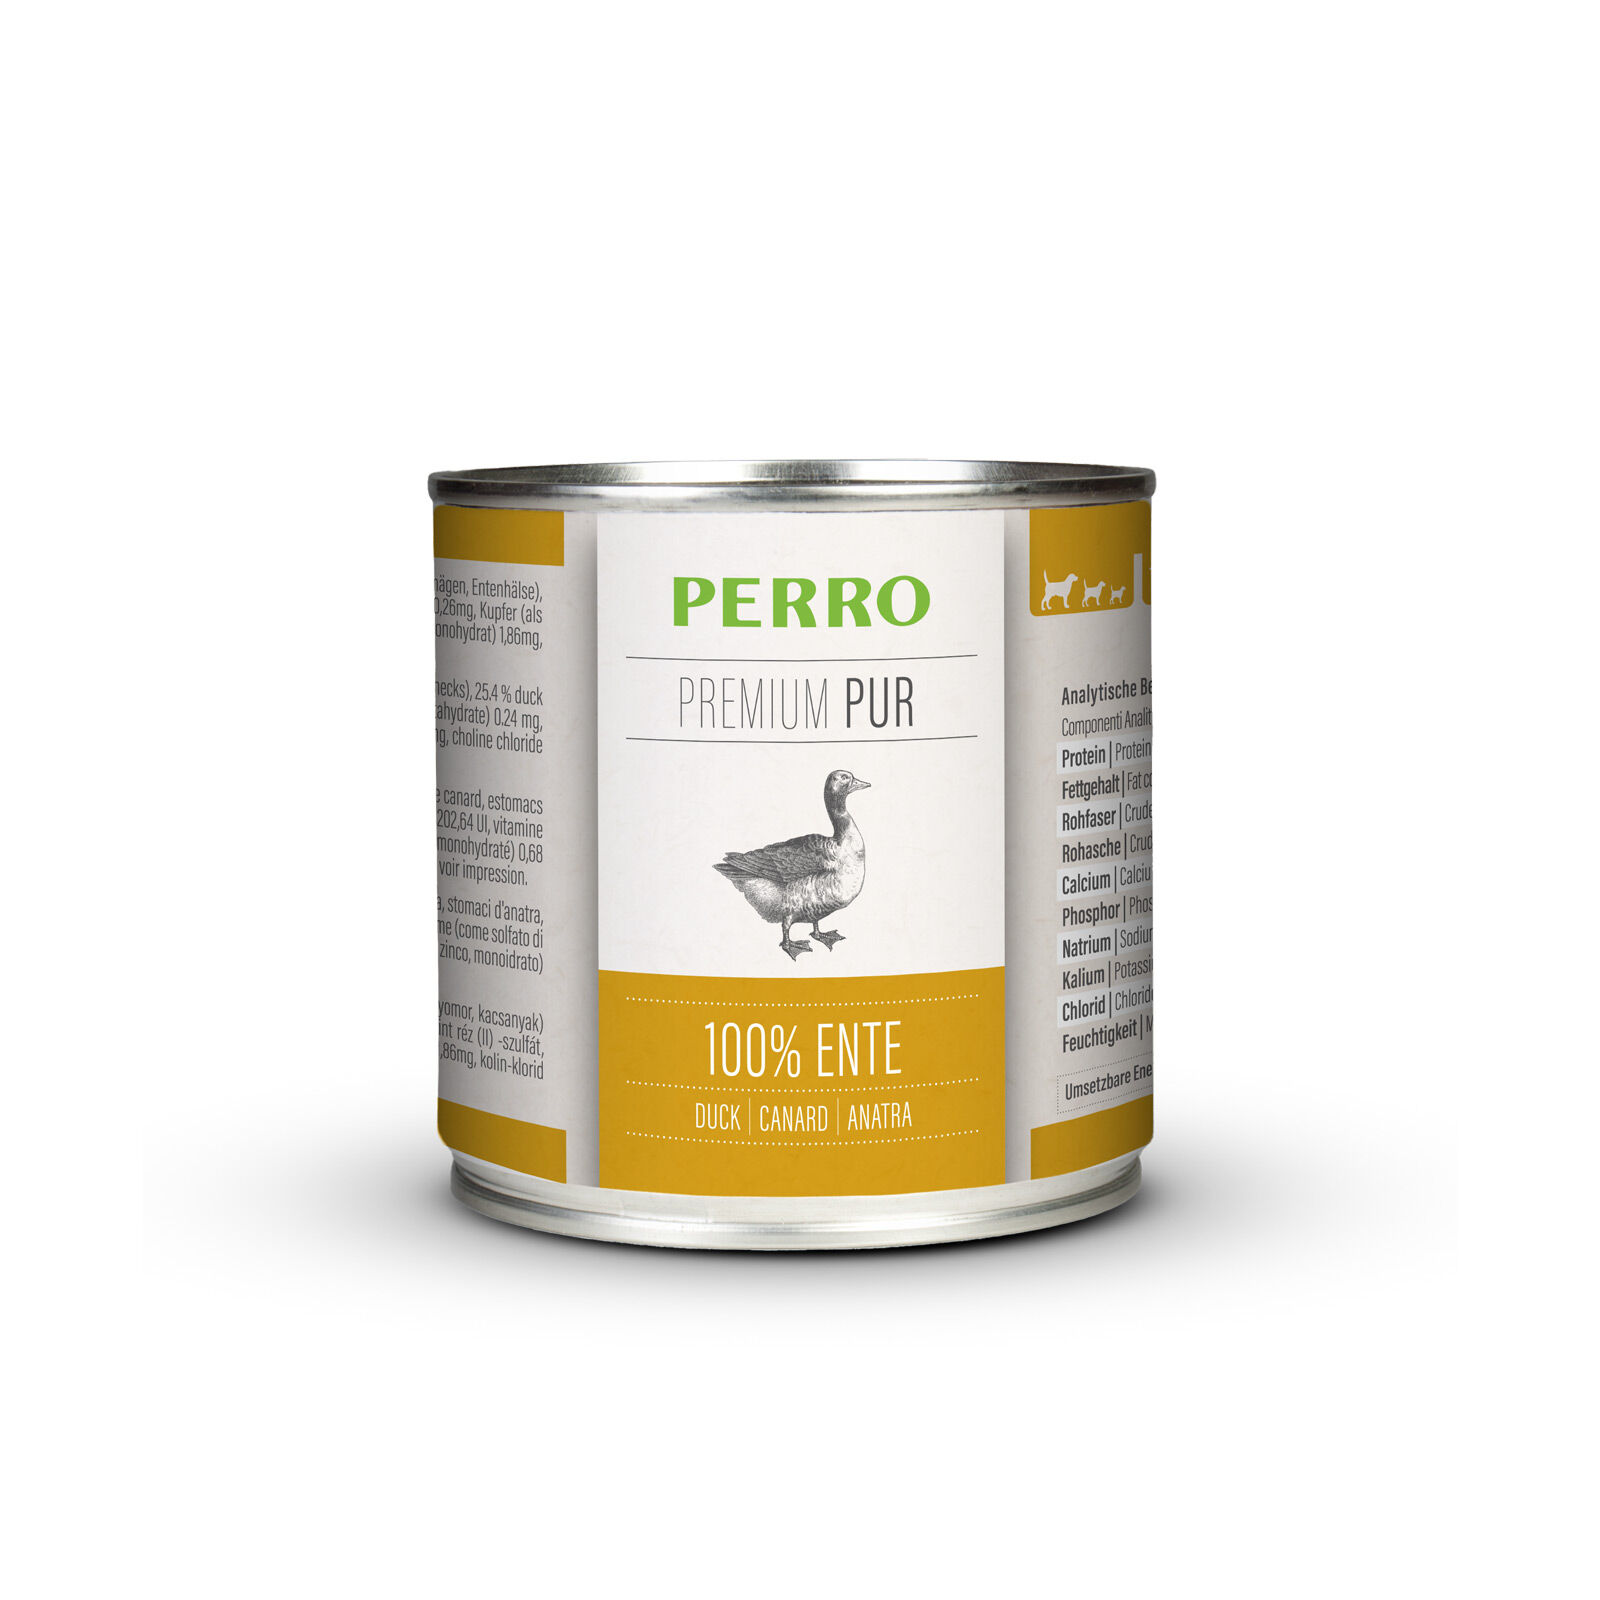 PERRO-Premium-Pur-Ente-200g-Nassfutter-Hund-181201